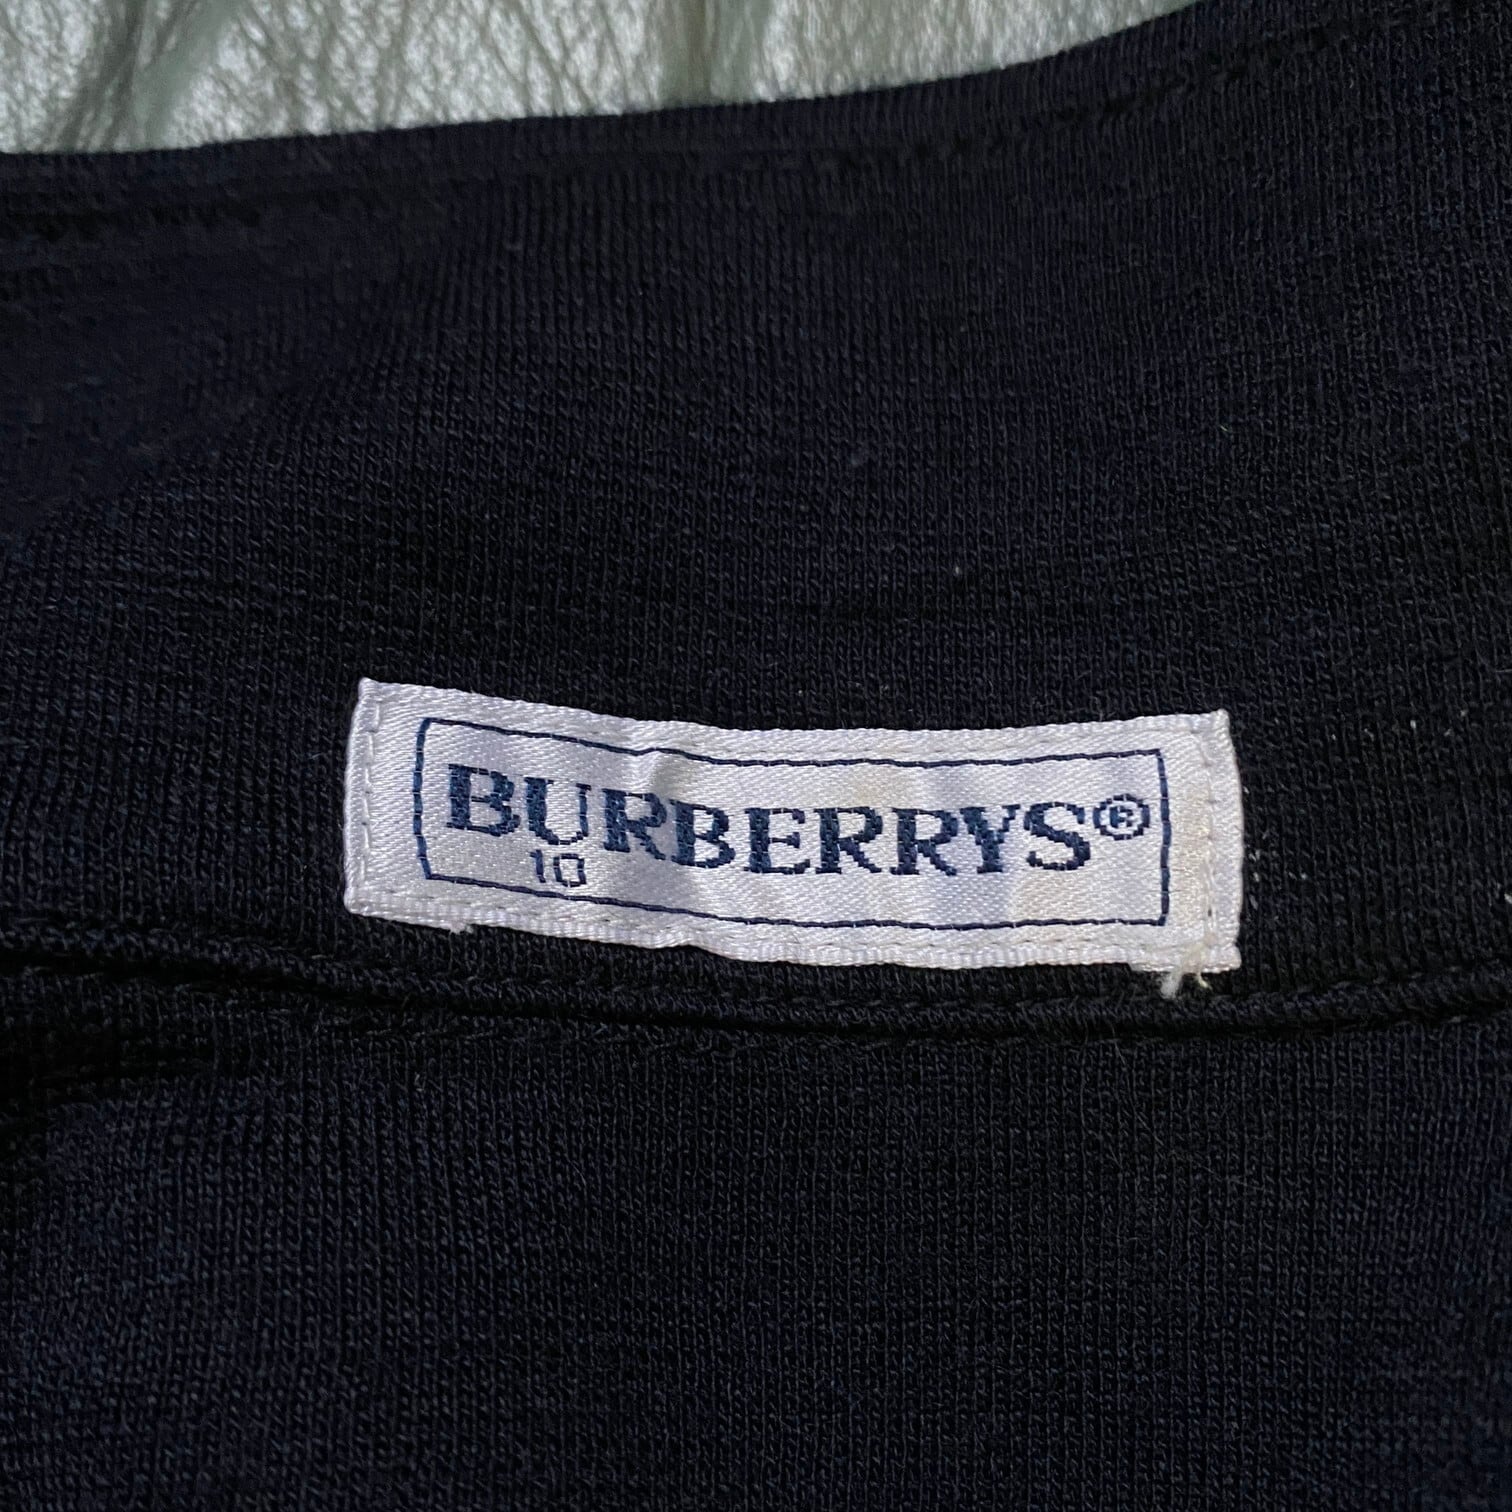 Burberry's バーバリー ニット ジャケット カーディガン シャツ 